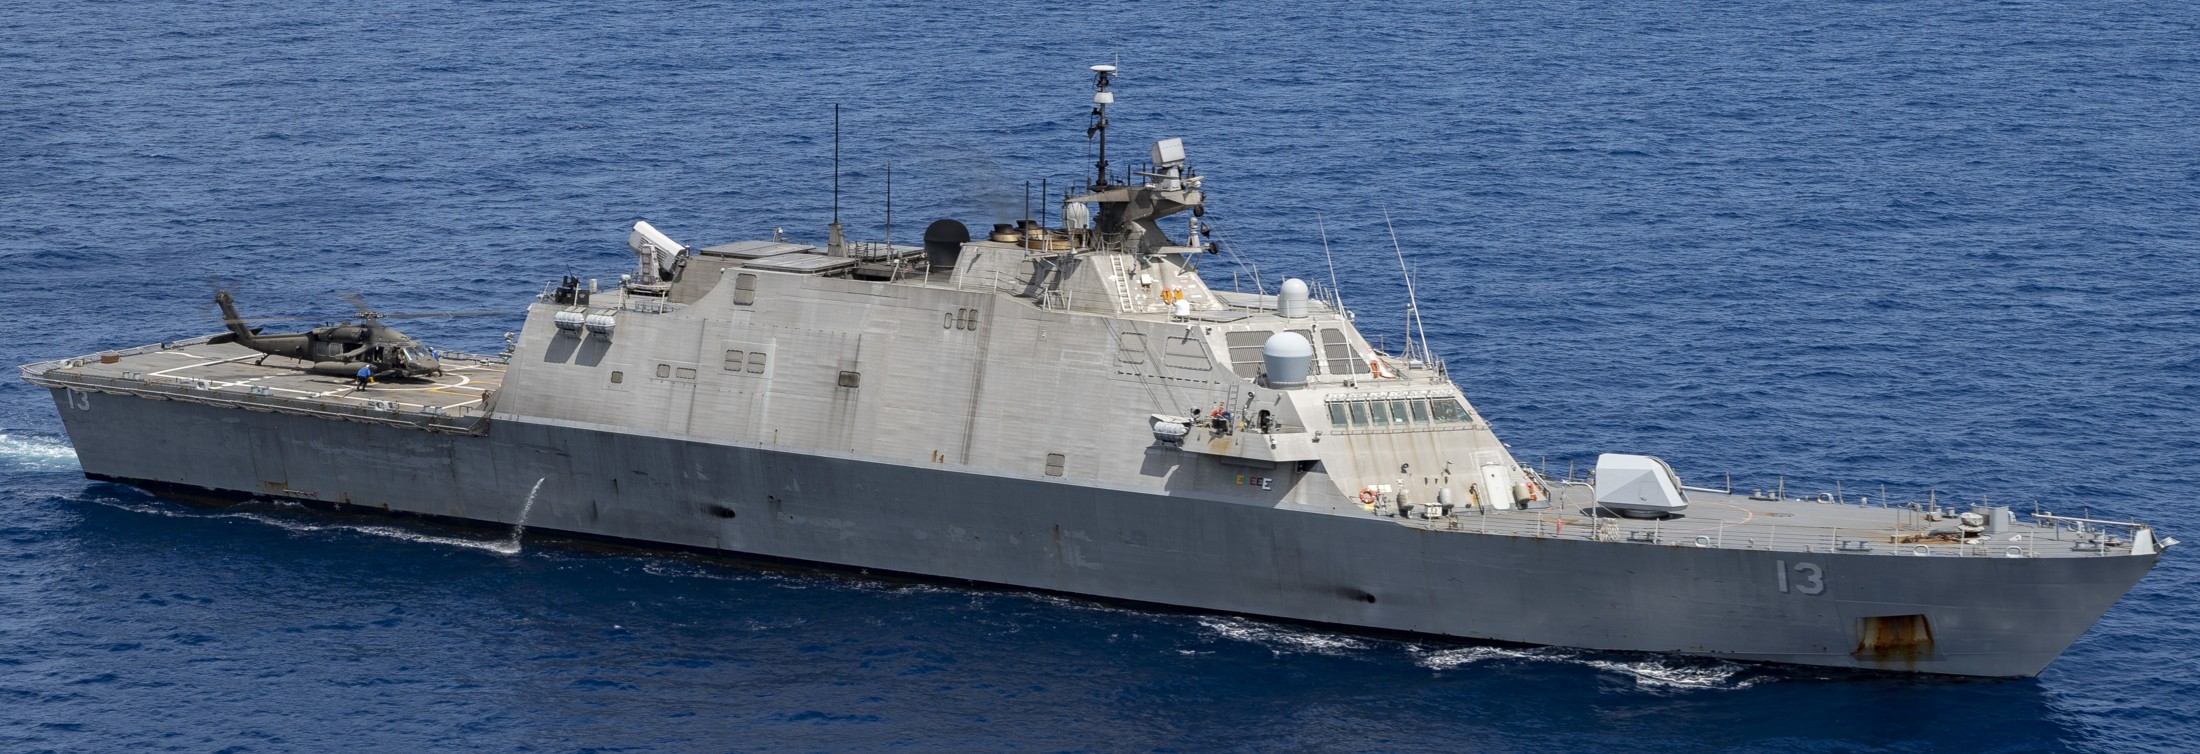 lcs-13 uss wichita freedom class littoral combat ship us navy honduras 43